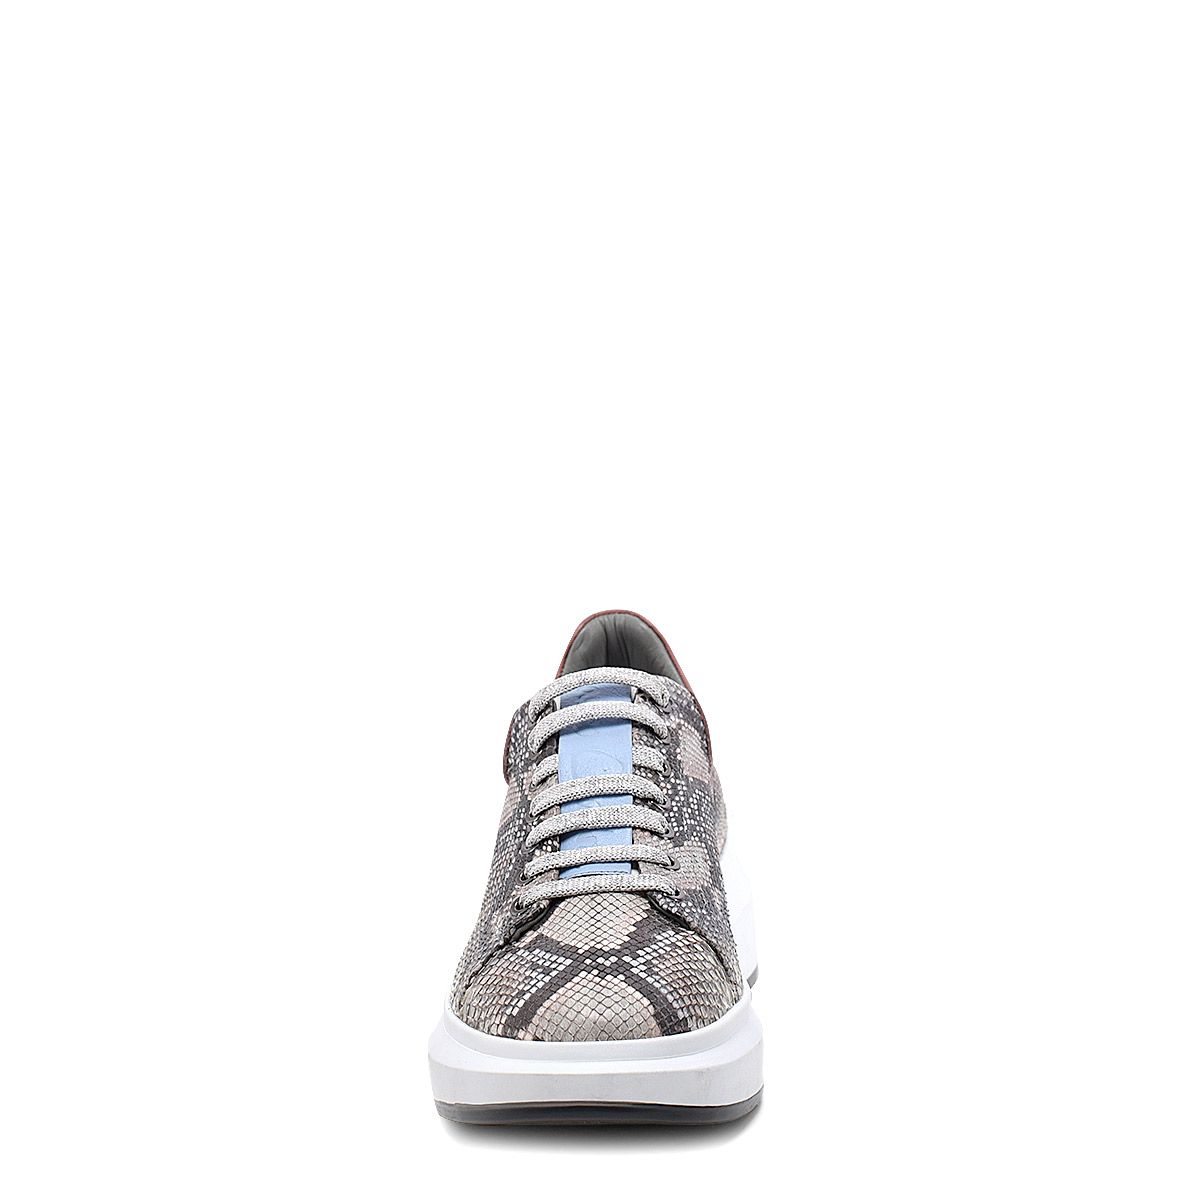 4P4PBKN - Cuadra blue casual fashion python sneakers for women-Kuet.us